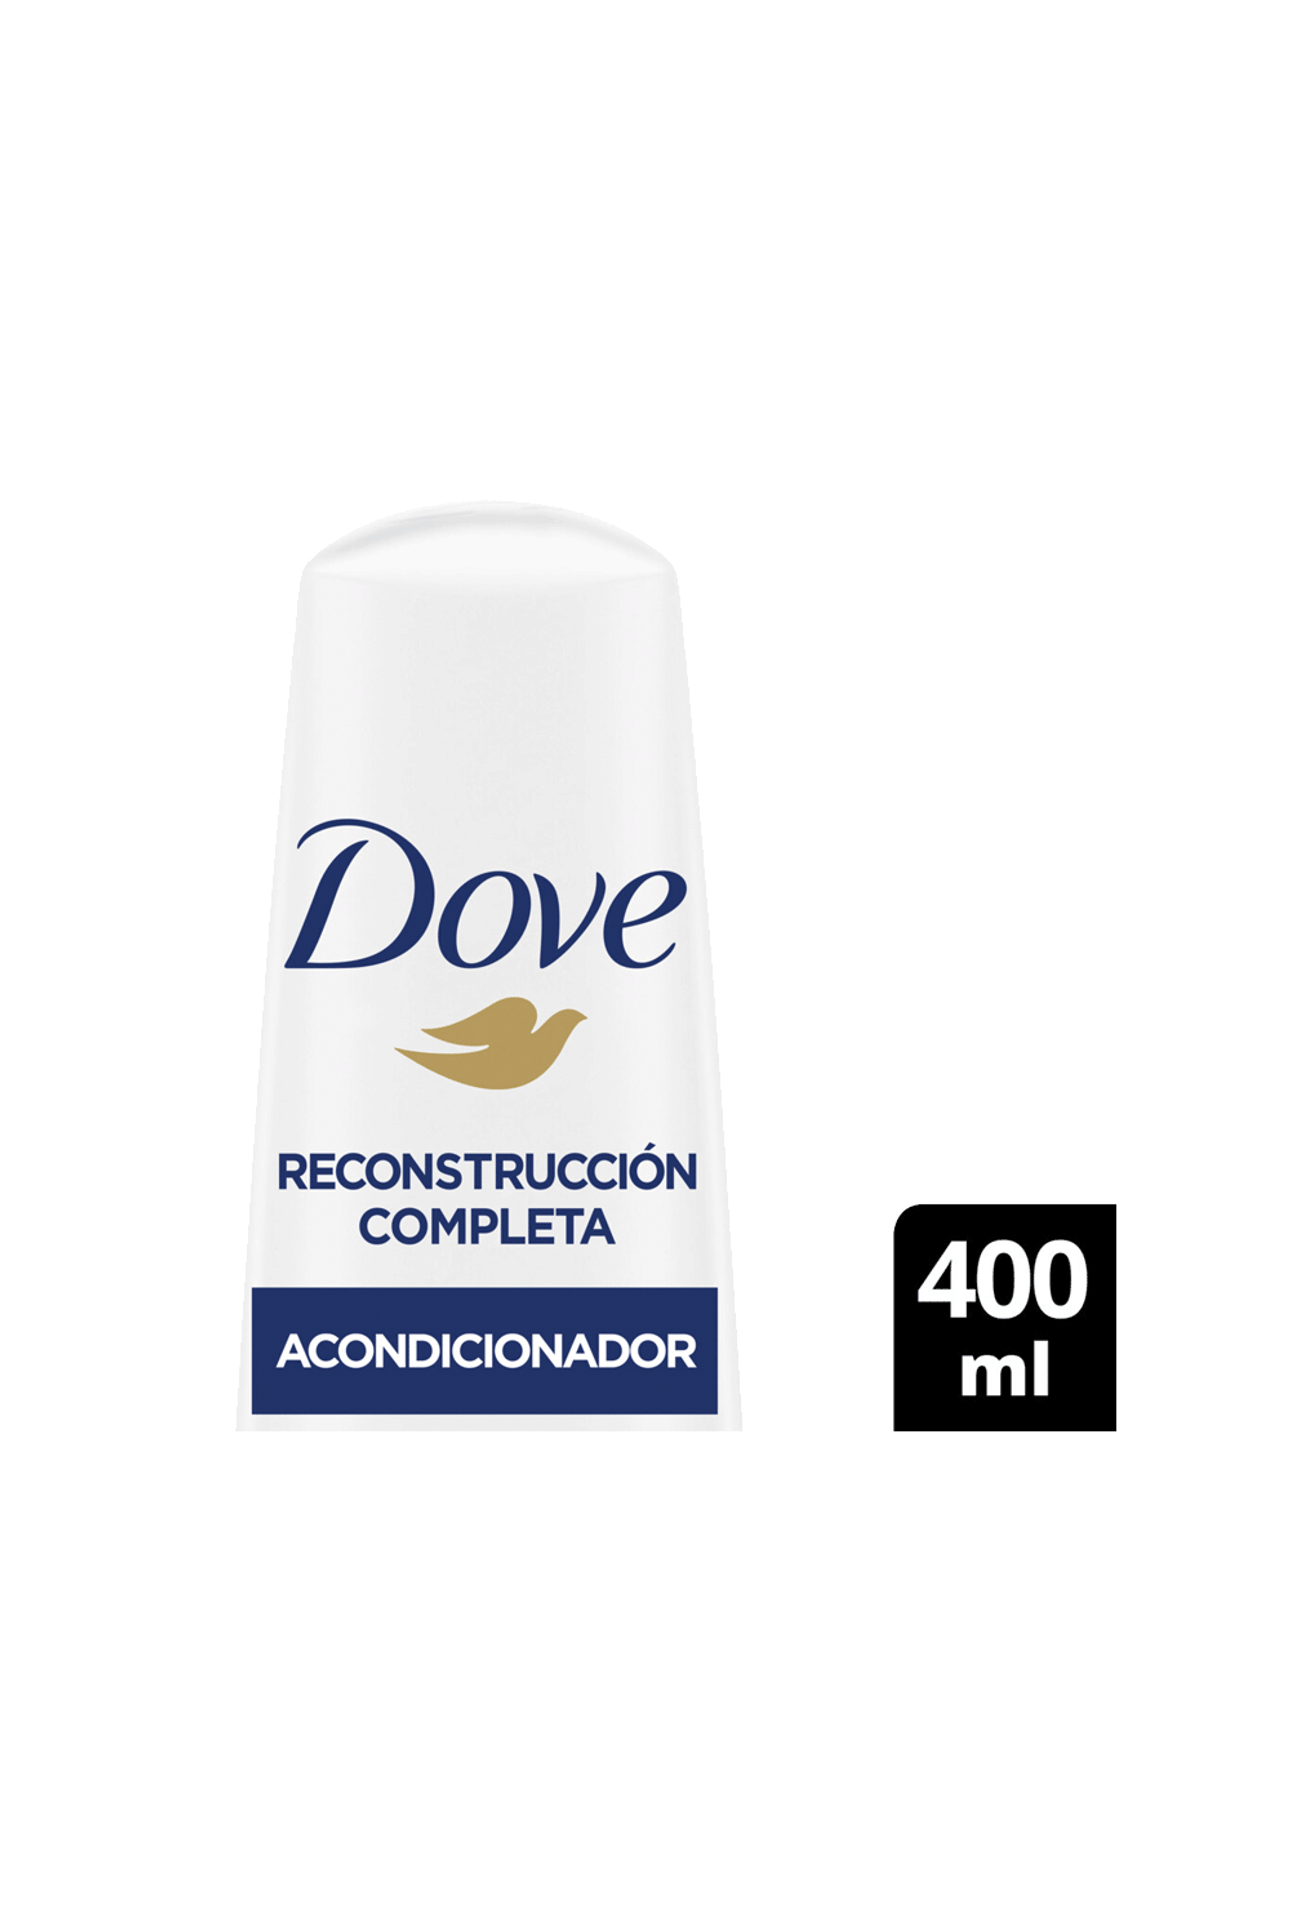 Dove-Acondicionador-Dove-Reconstruccion-Completa-x400ml-7791293047508_img1